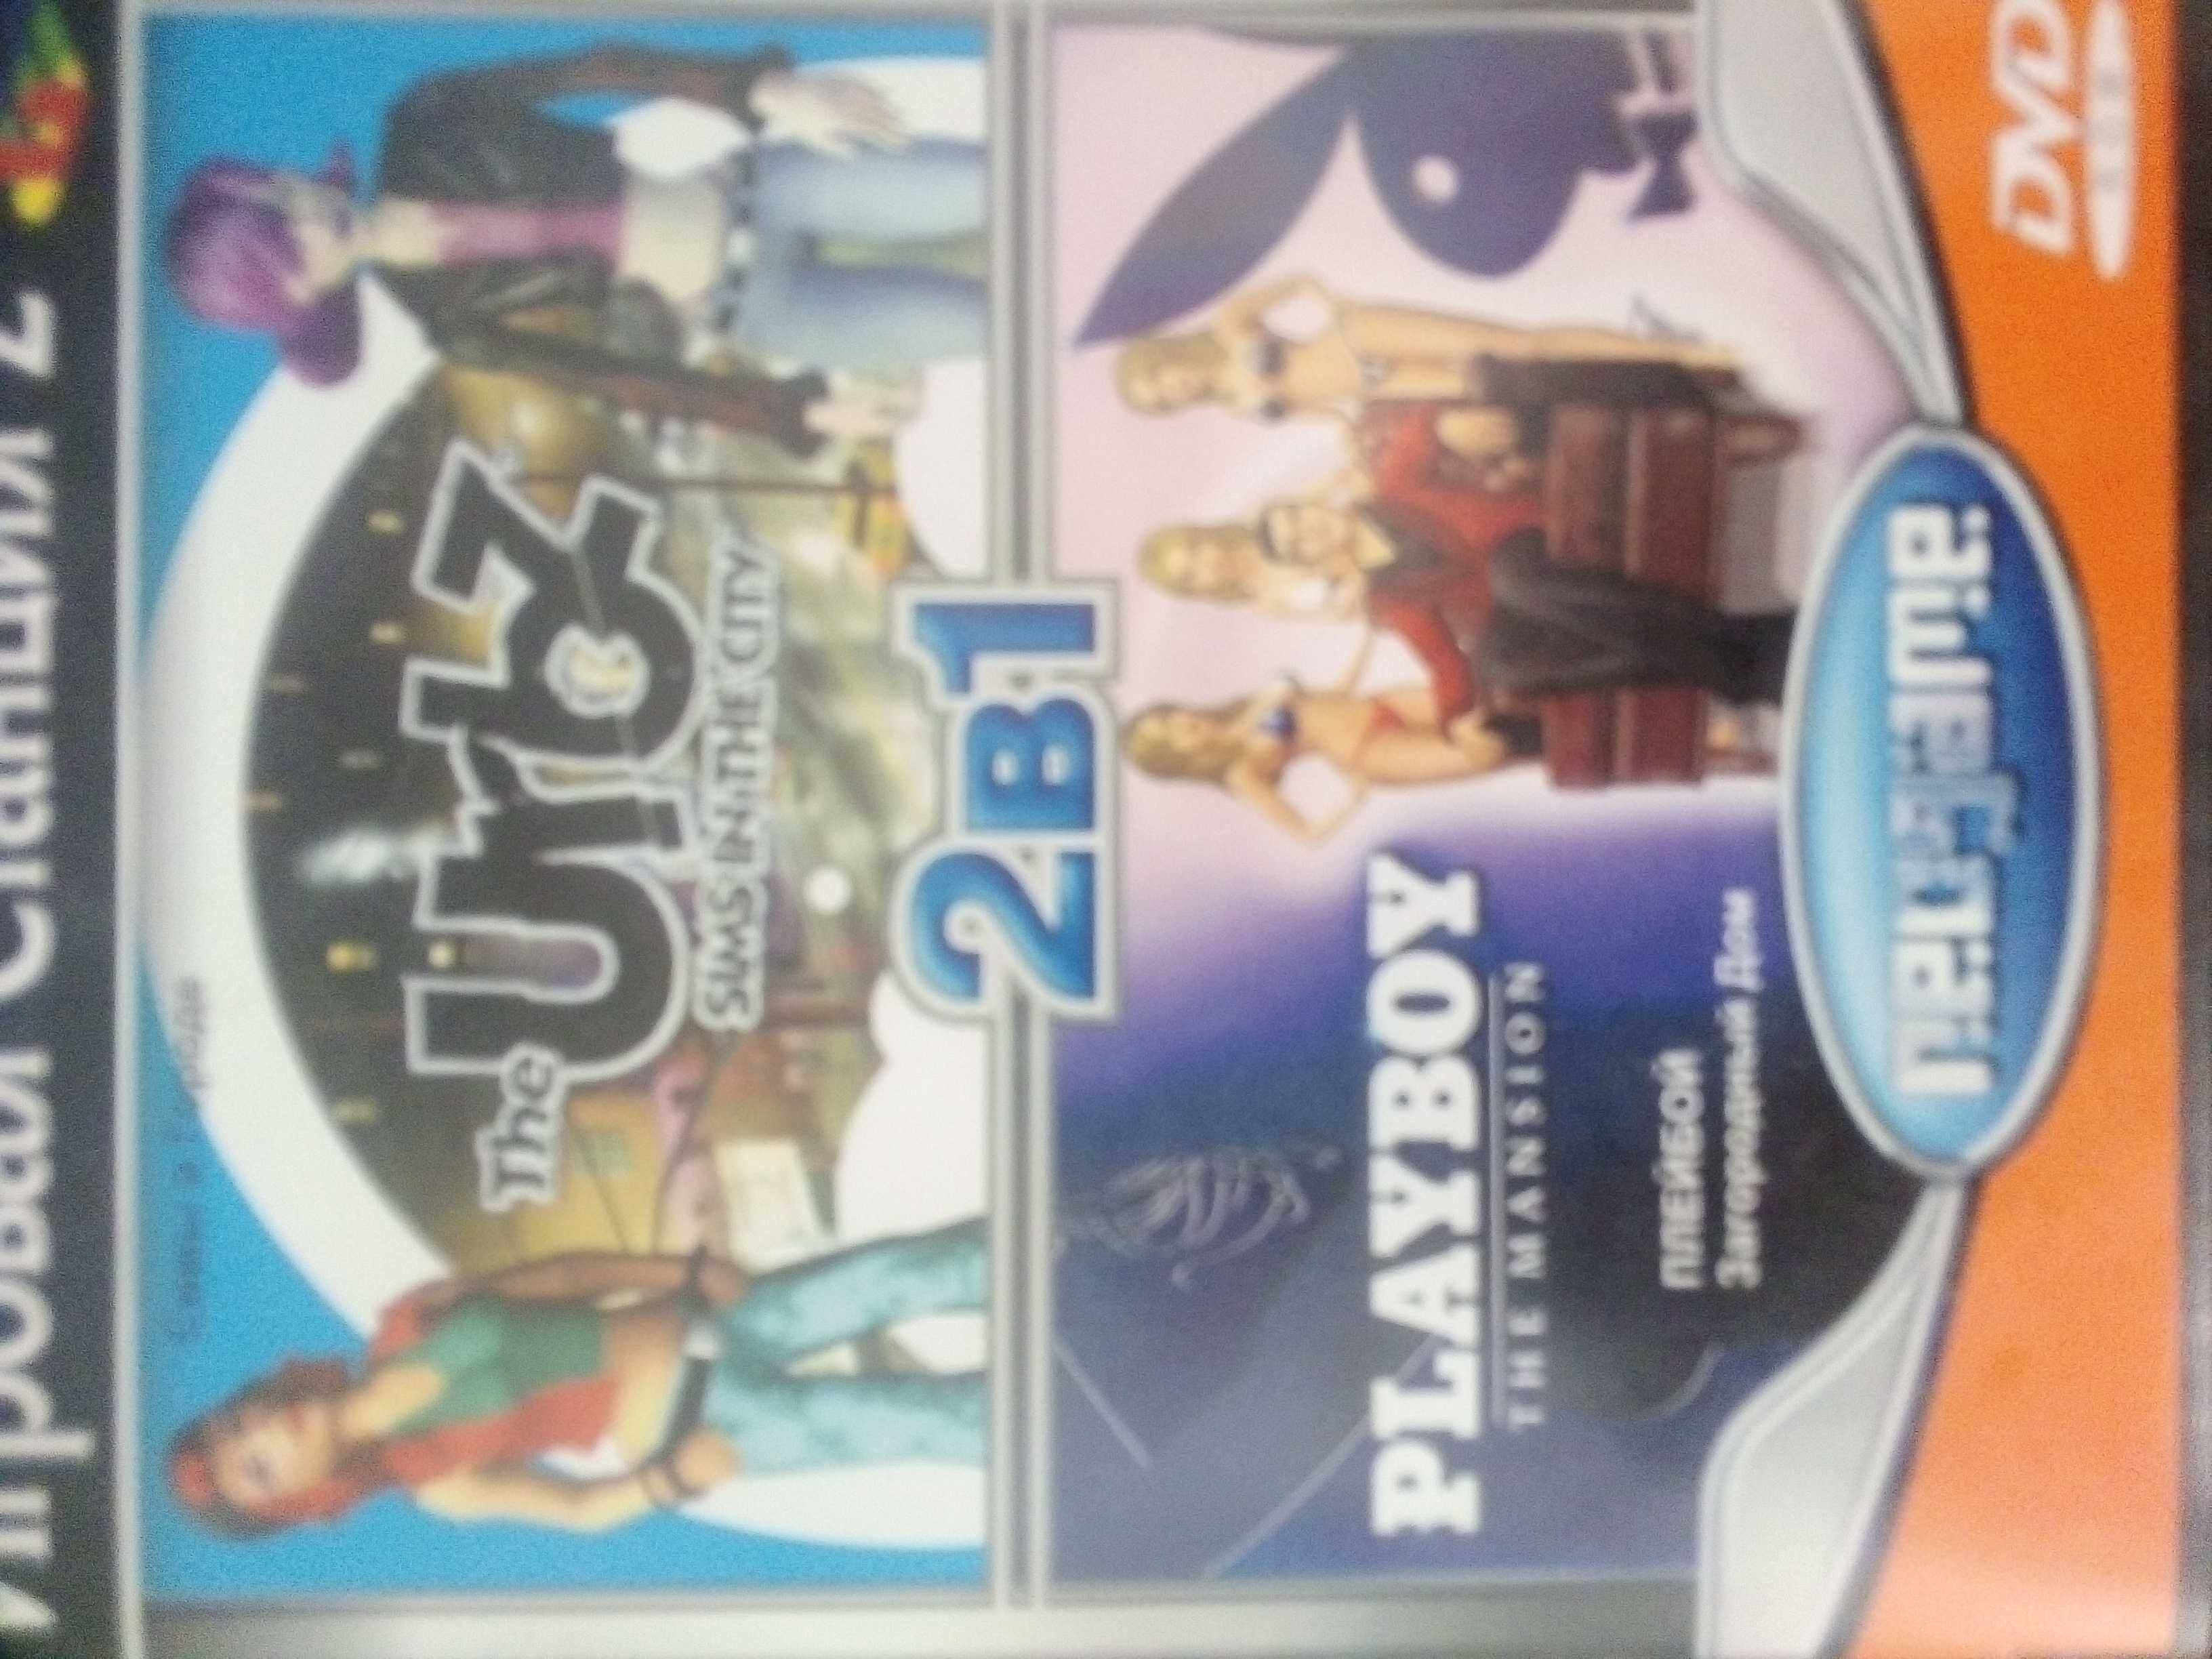 Продам диски на Playstation 2 ,по 50 грн за диск